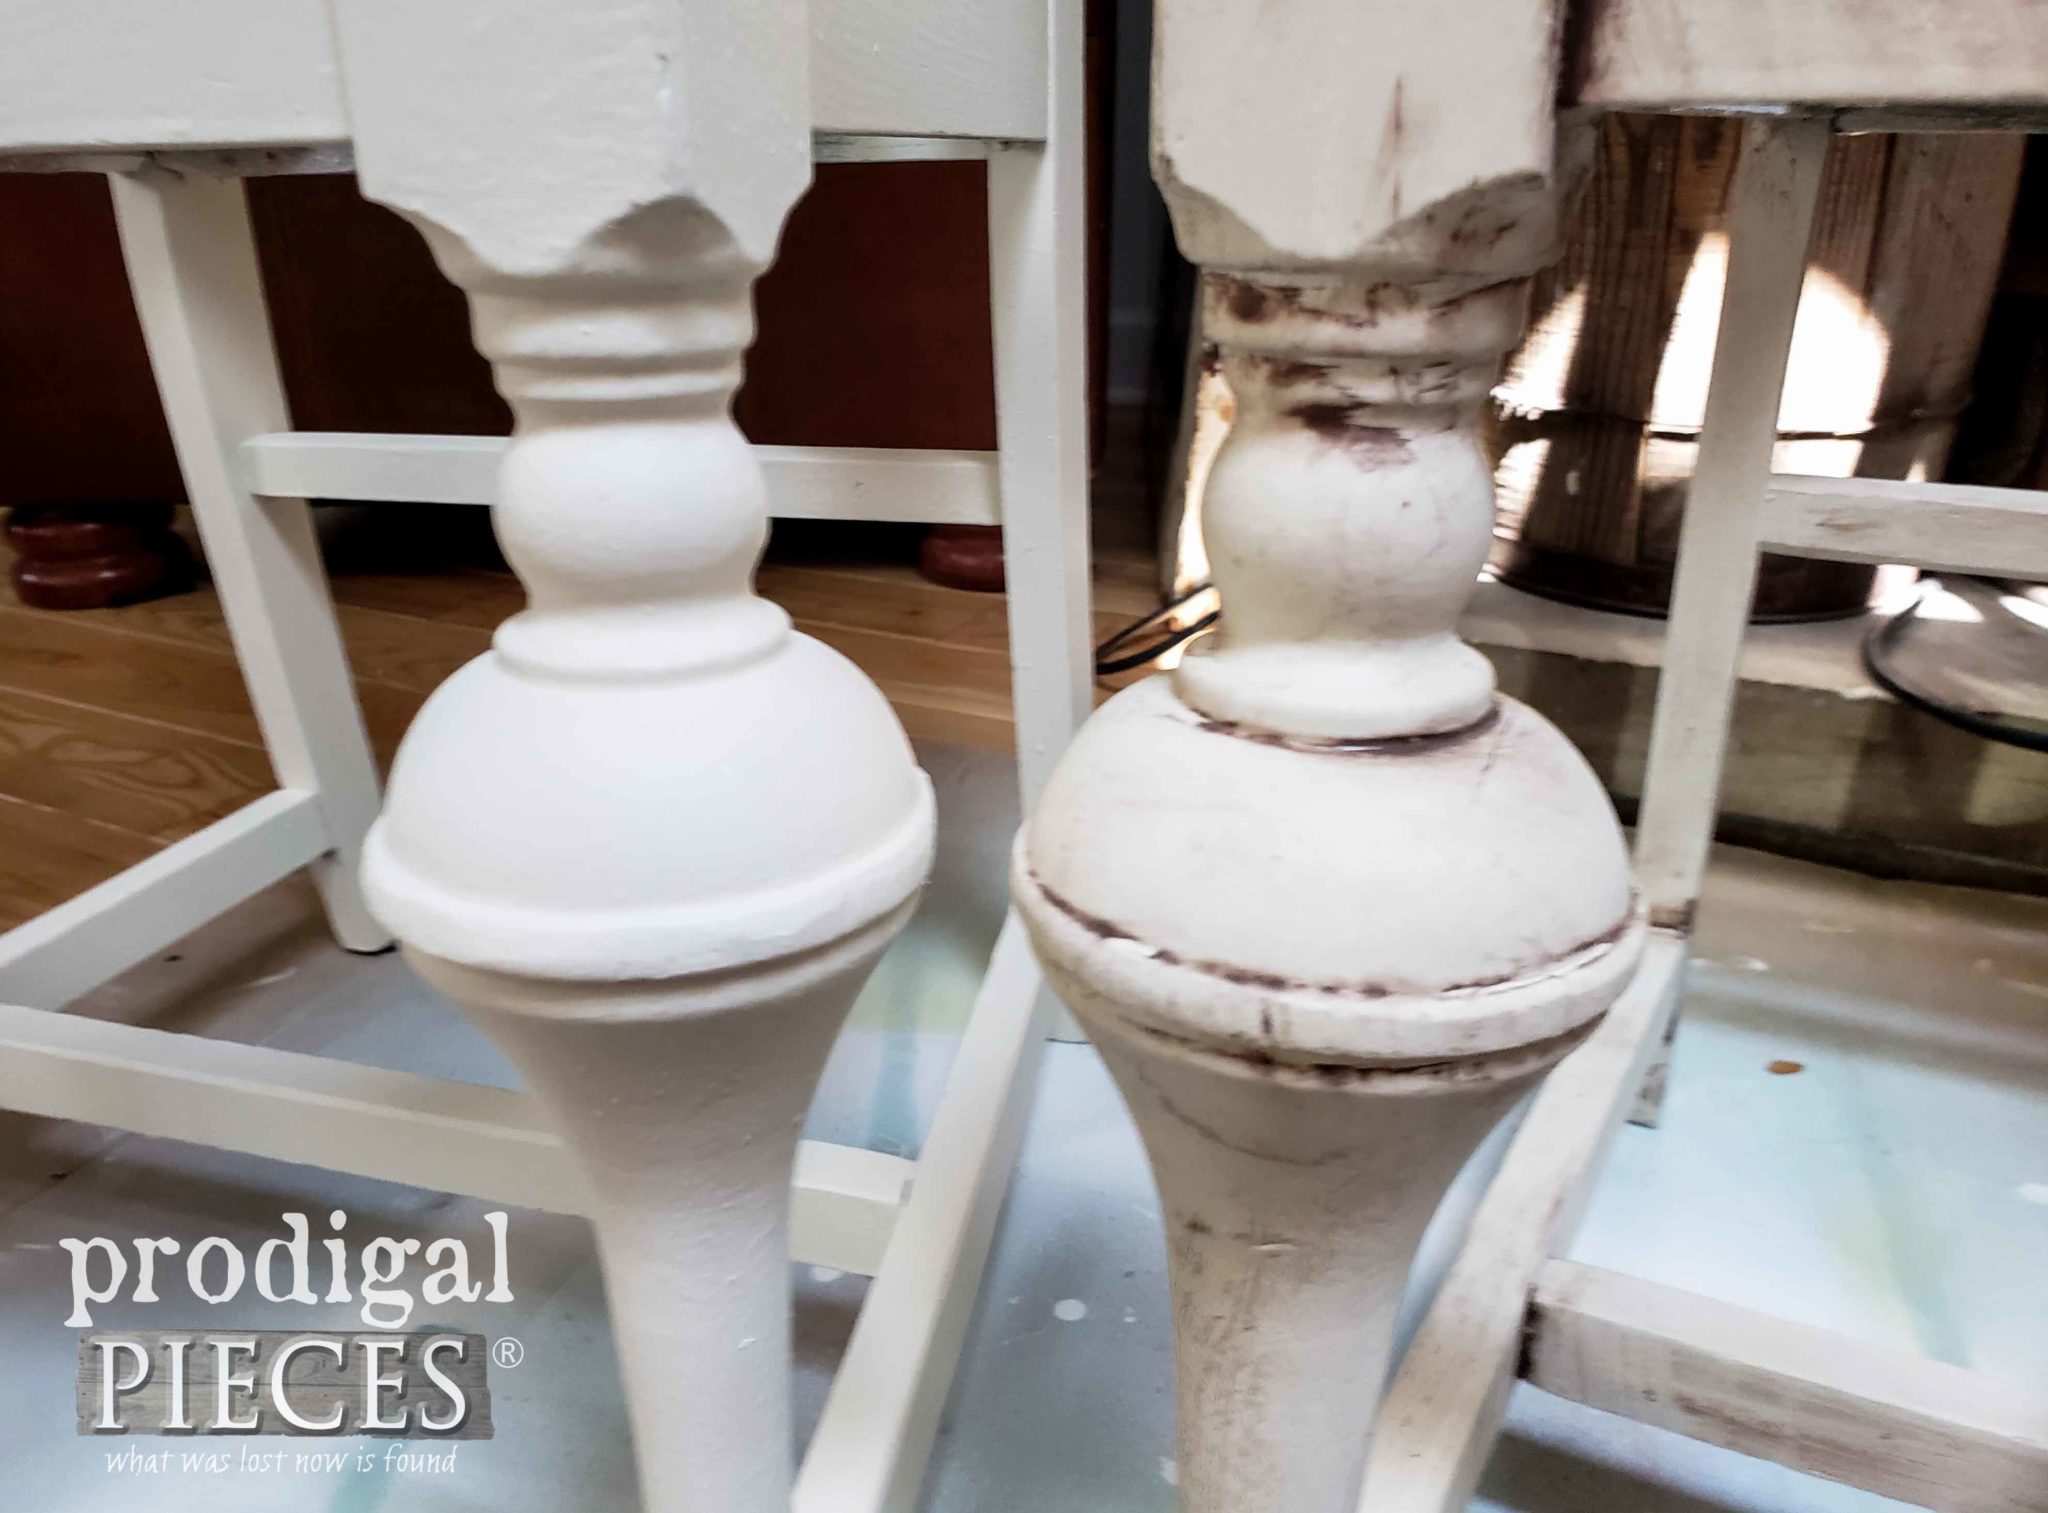 Glazed vs. Non-Glazed Antique Chairs | prodigalpieces.com #prodigalpieces #furniture #diy #home #homedecor